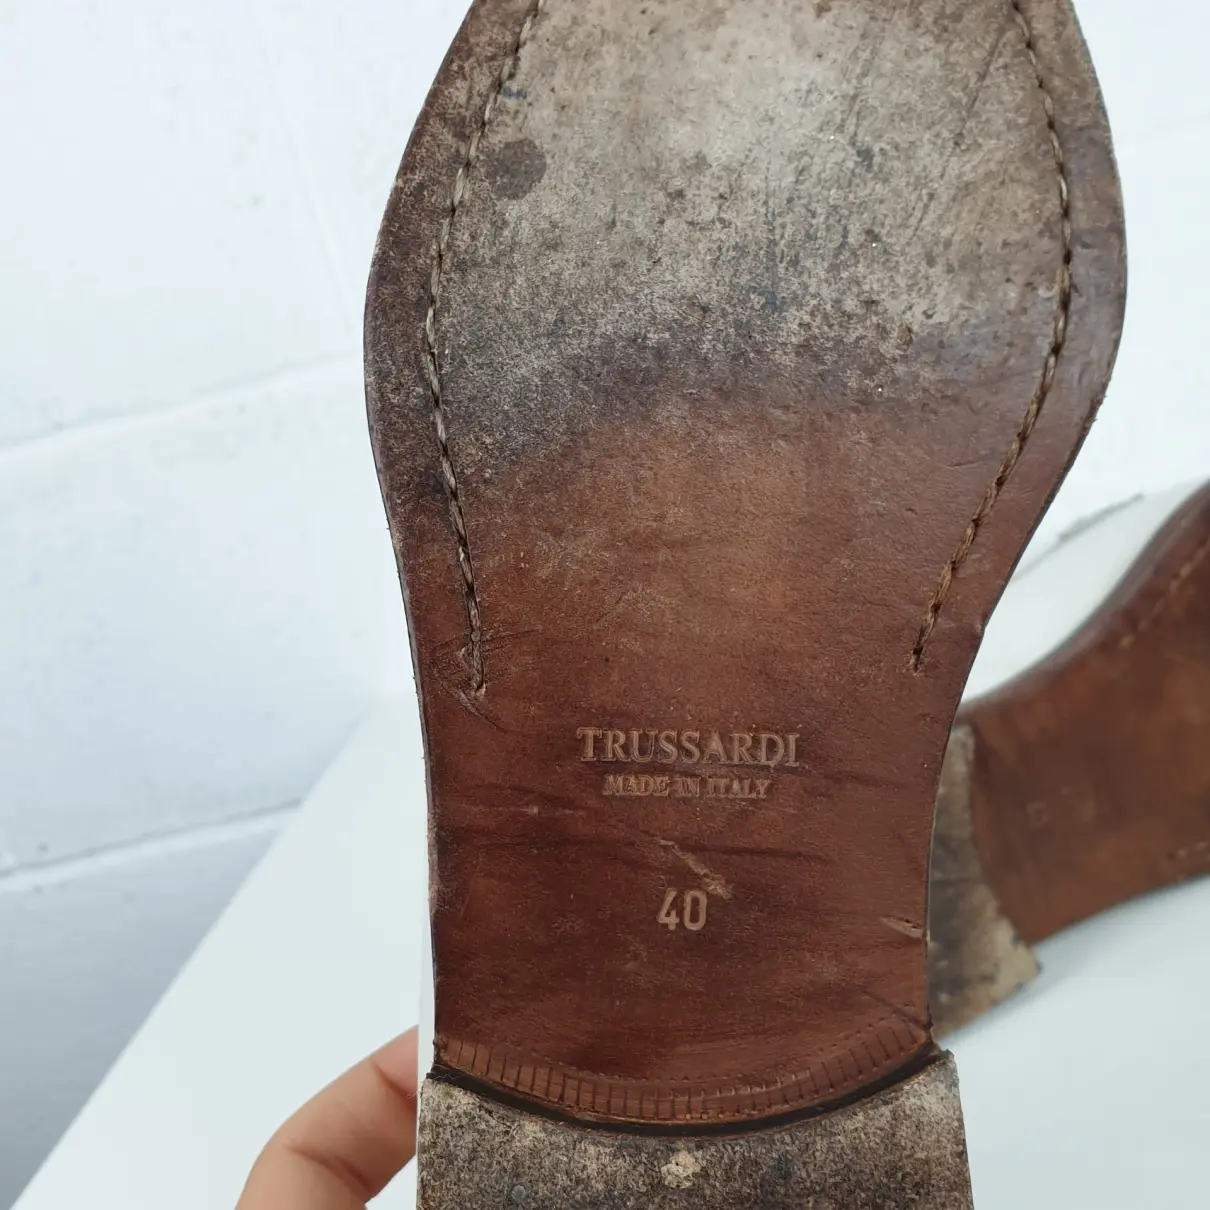 Buy Trussardi Leather flats online